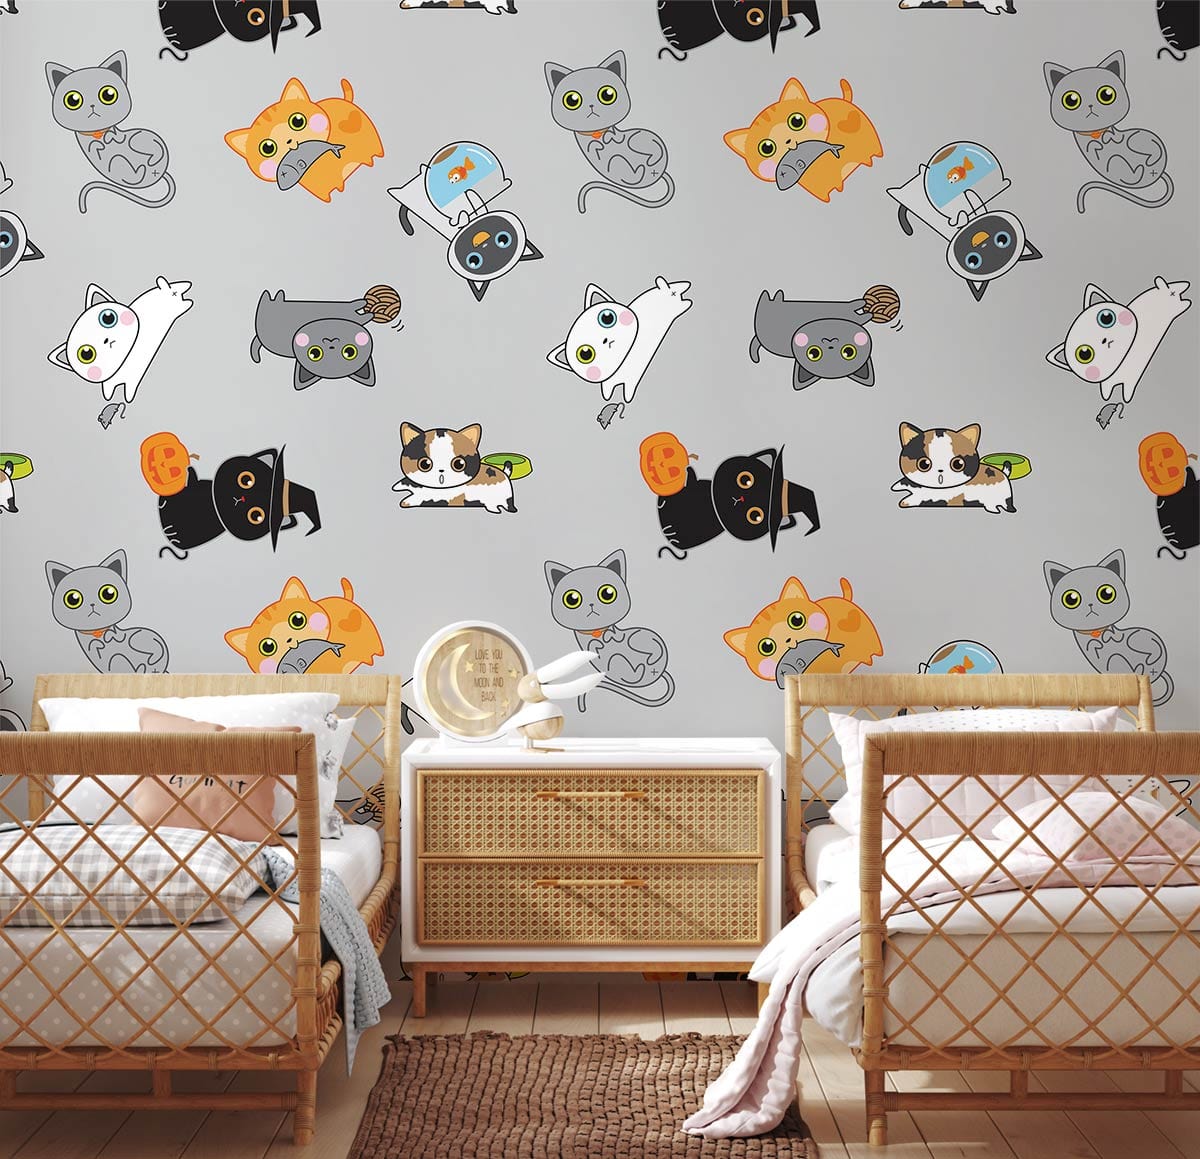 Whimsical Playful Cat Mural Wallpaper